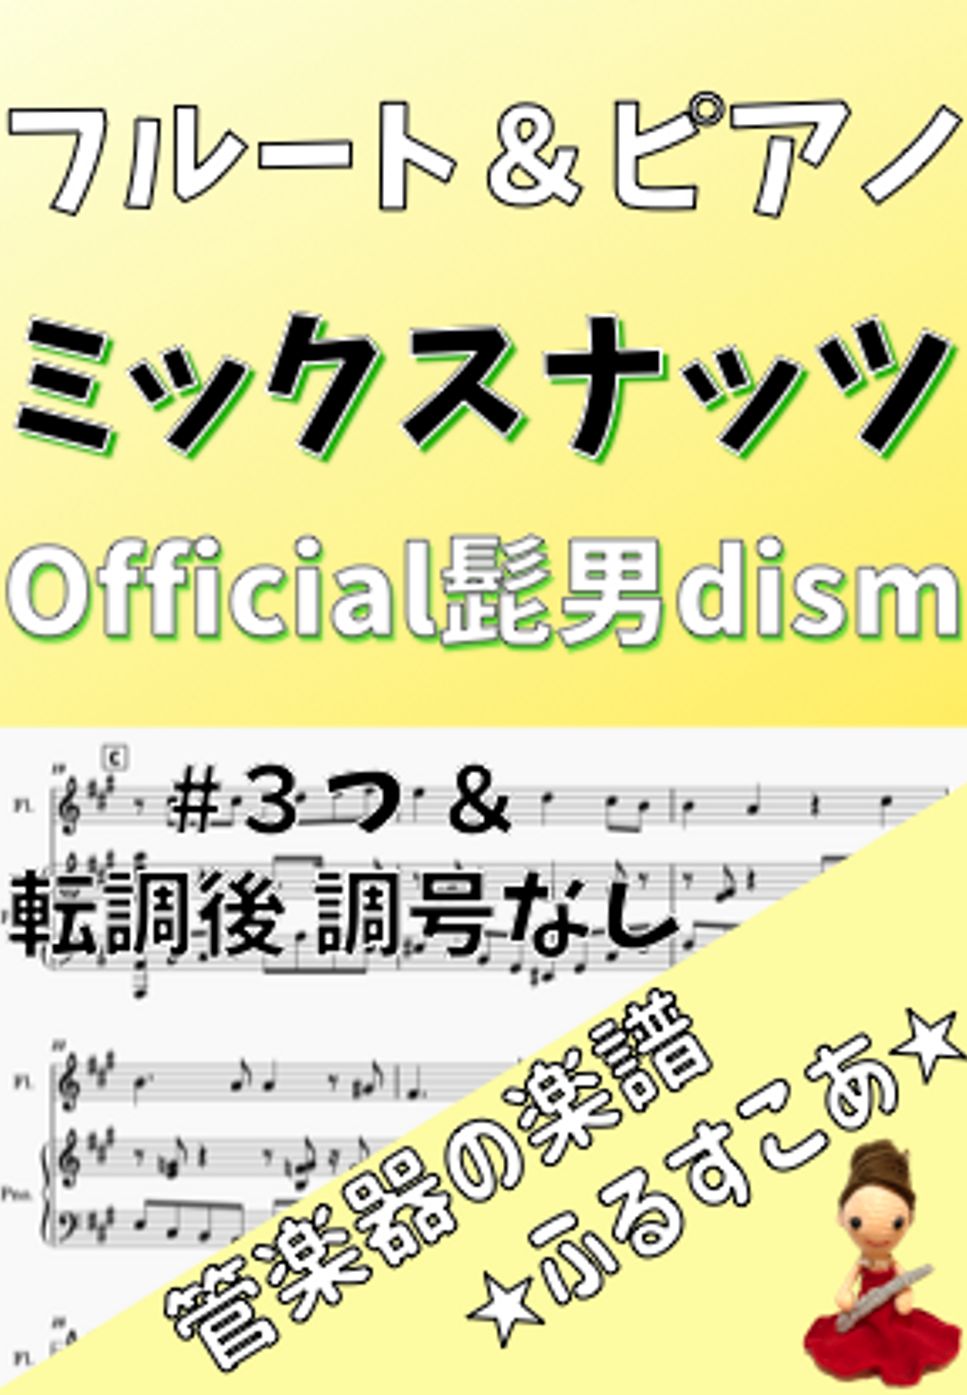 Official髭男dism - 【フルート＆ピアノ】#3＆調号なしミックスナッツ（Official髭男dism） by 管楽器の楽譜★ふるすこあ